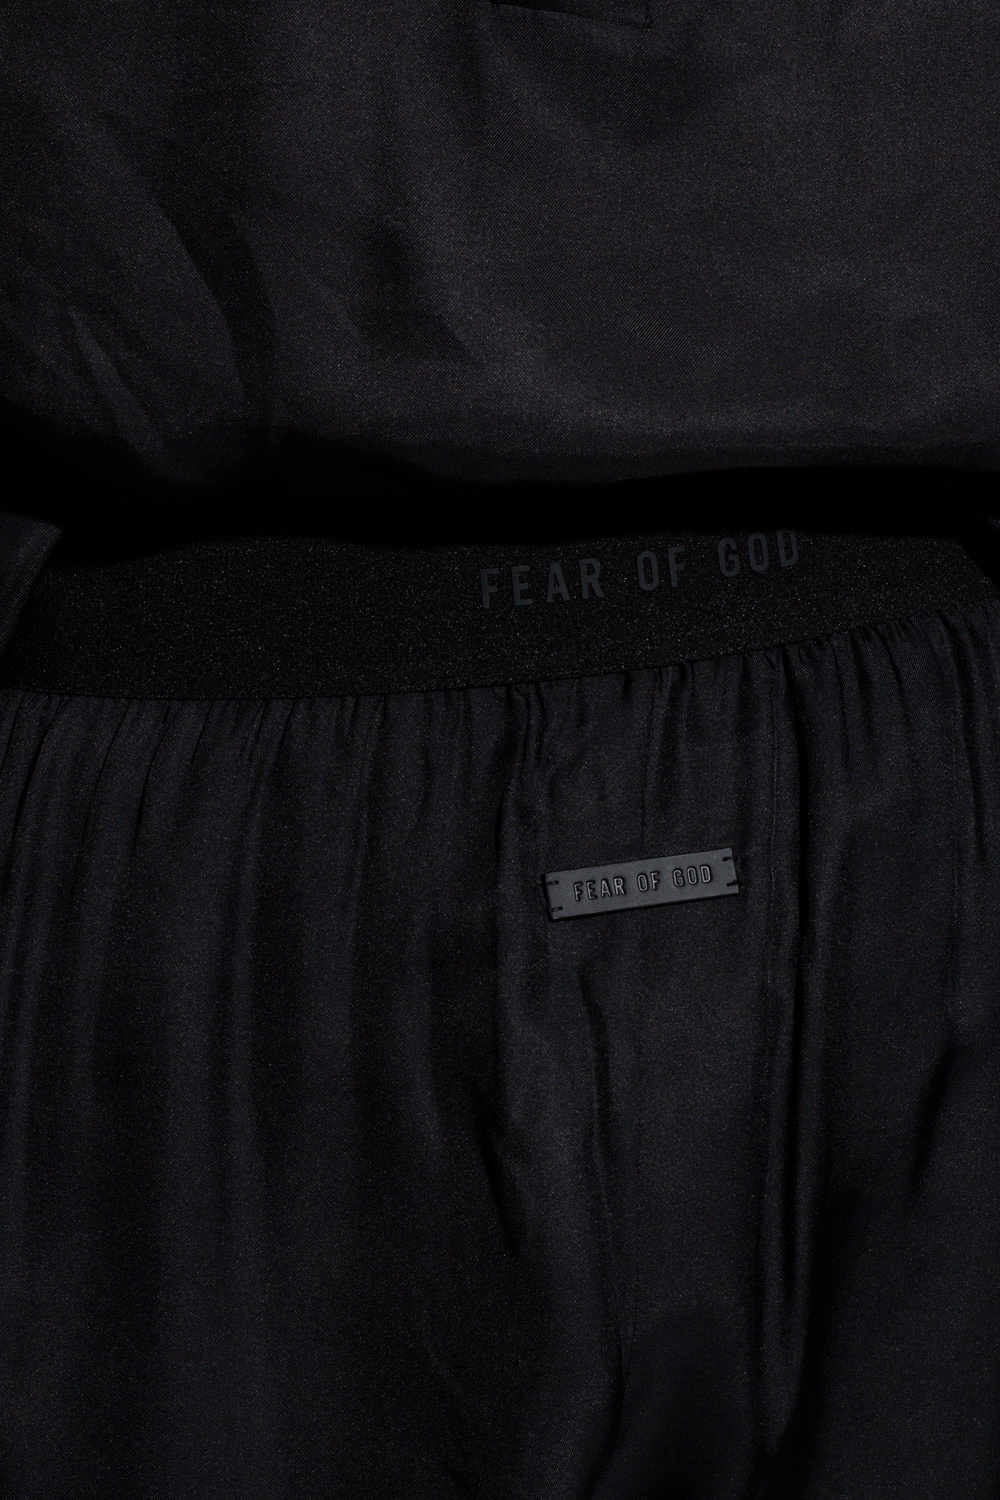 Fear Of God Pyjama bottom